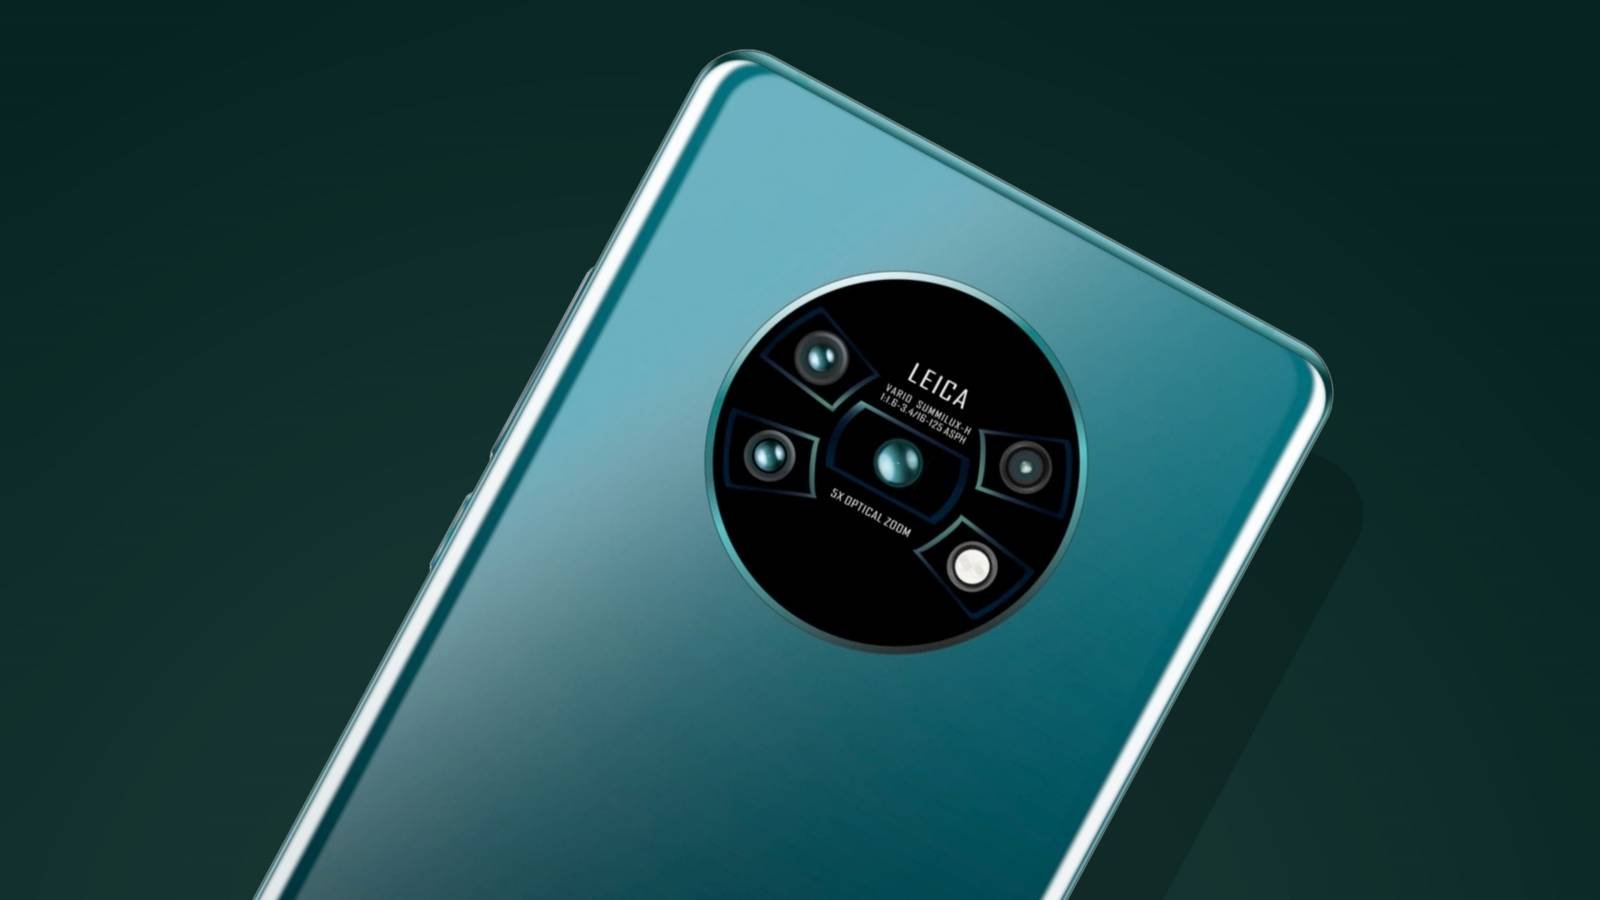 Huawei MATE 30 PRO vrea sa DISTRUGA iPhone 11 Pro cu o functie ABSURDA